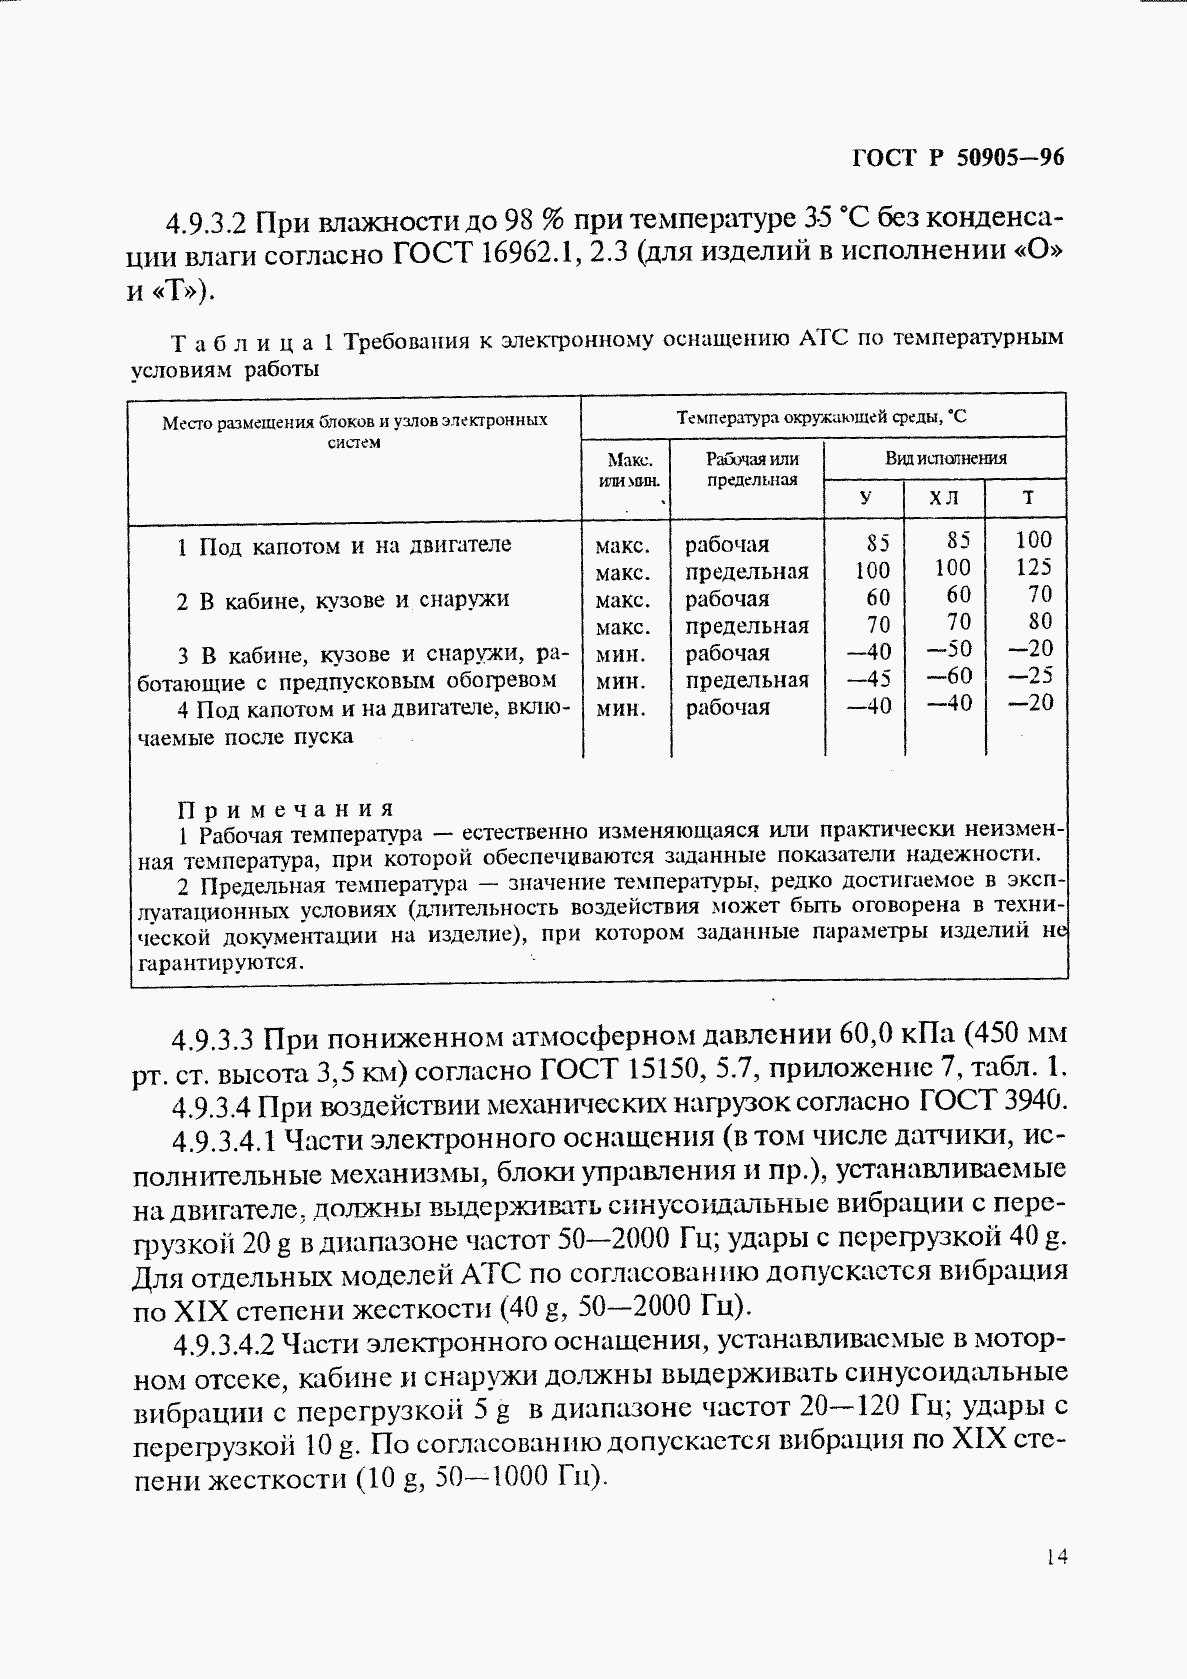 ГОСТ Р 50905-96, страница 17